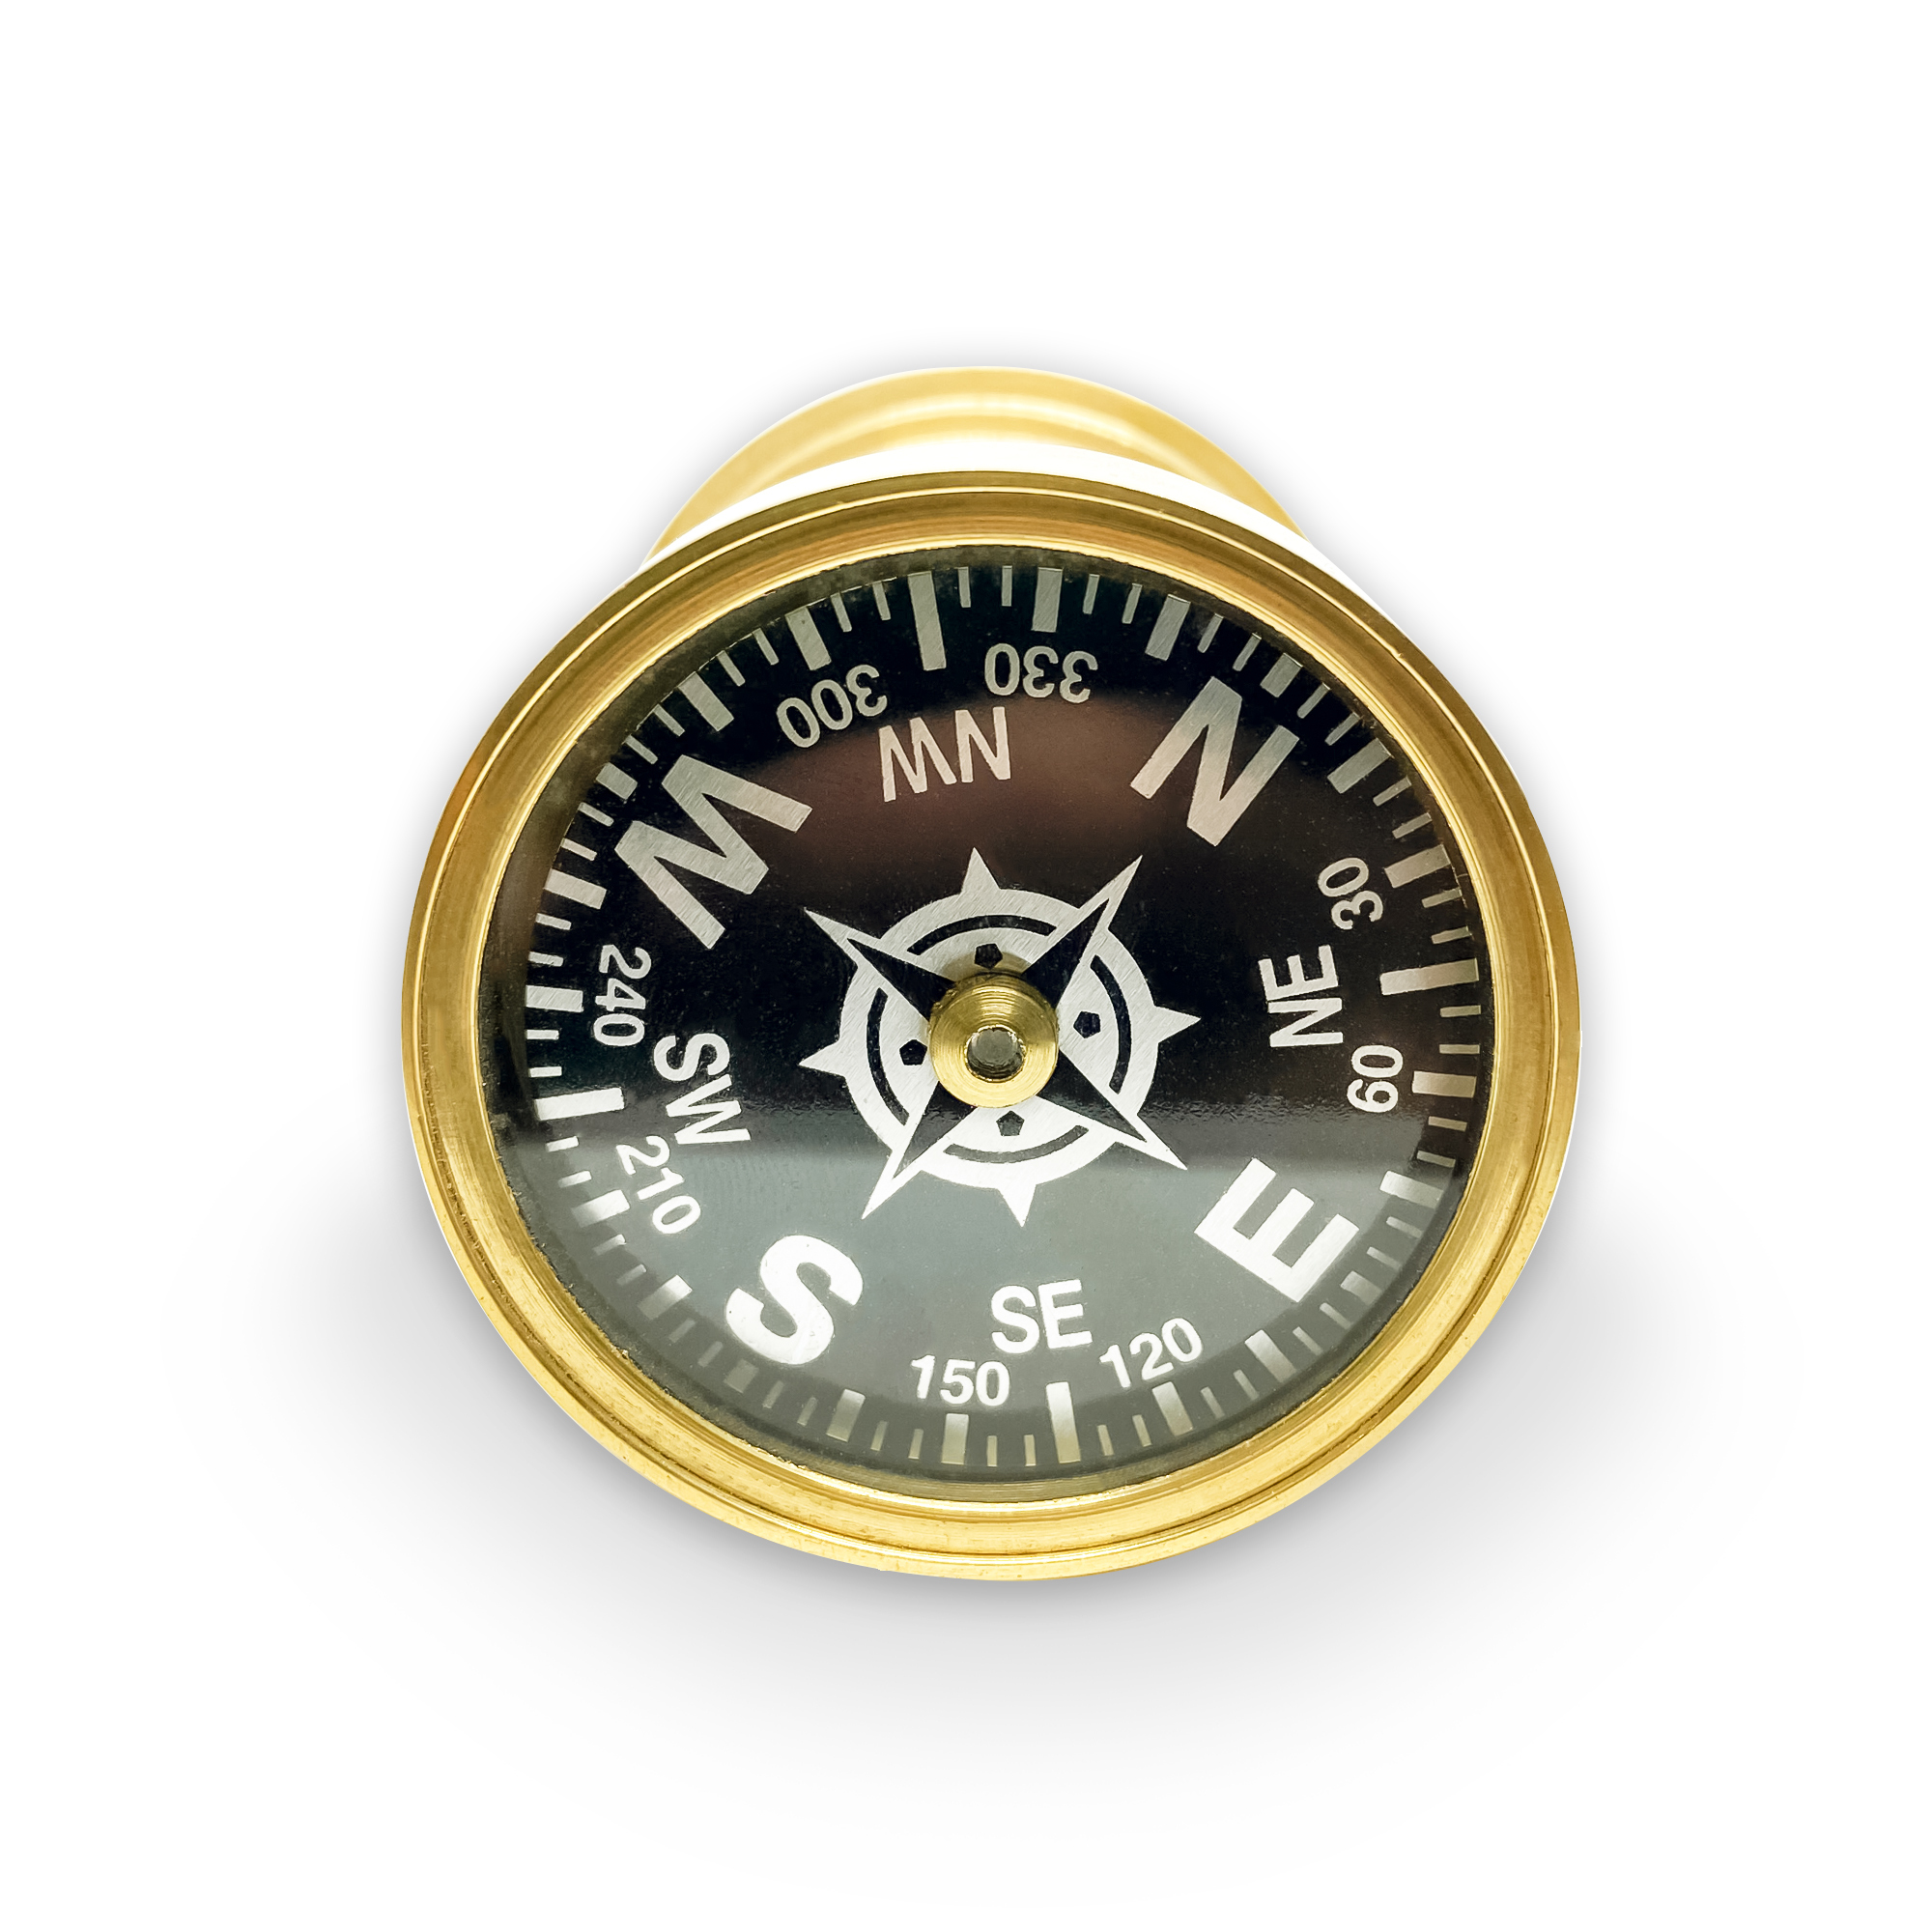 Brass Marine Ship Compass